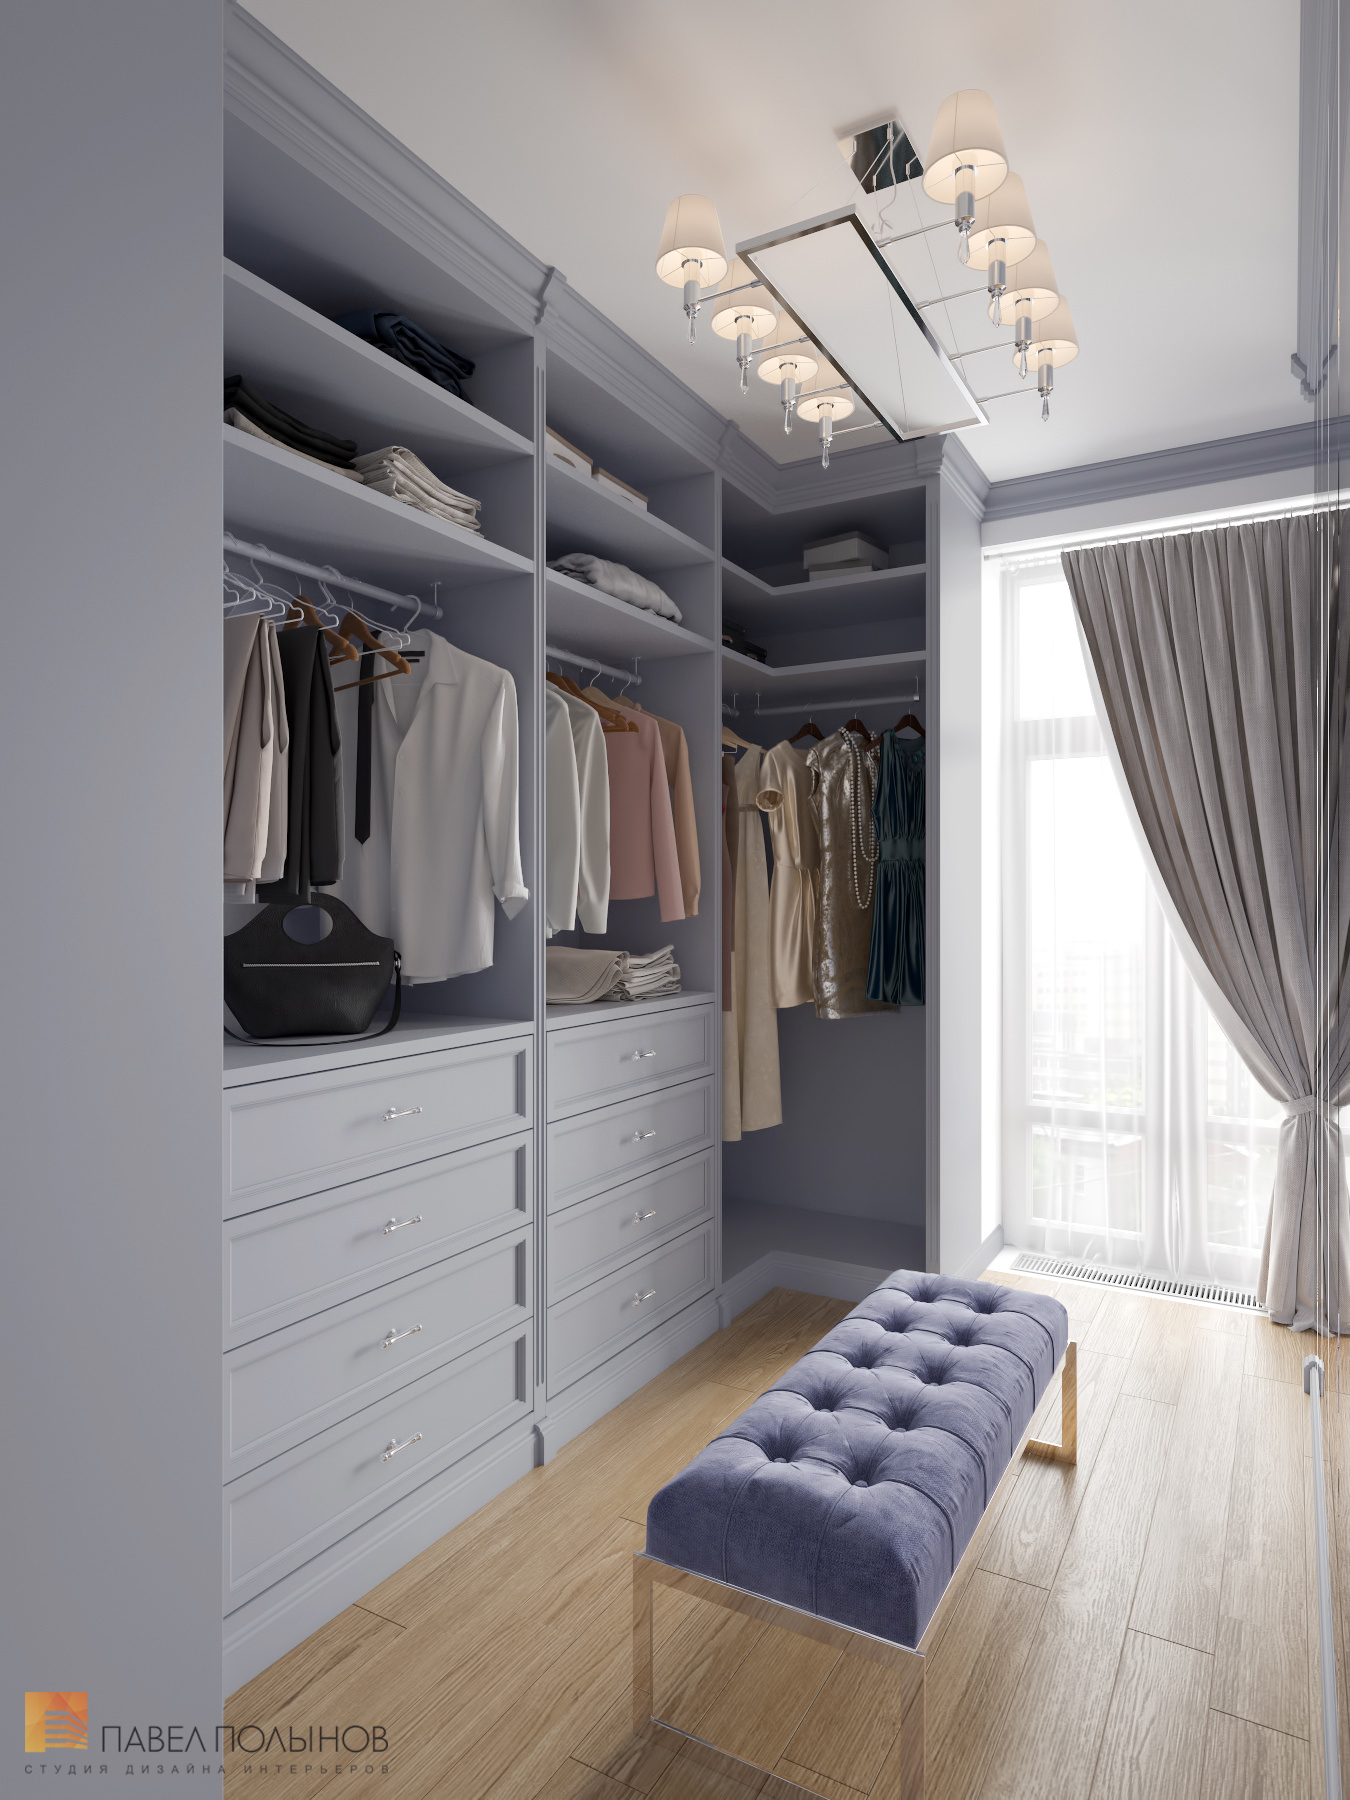 Фото гардеробная комната из проекта «Интерьер квартиры в стиле неоклассики, ЖК «Парадный квартал», 190 кв.м.»